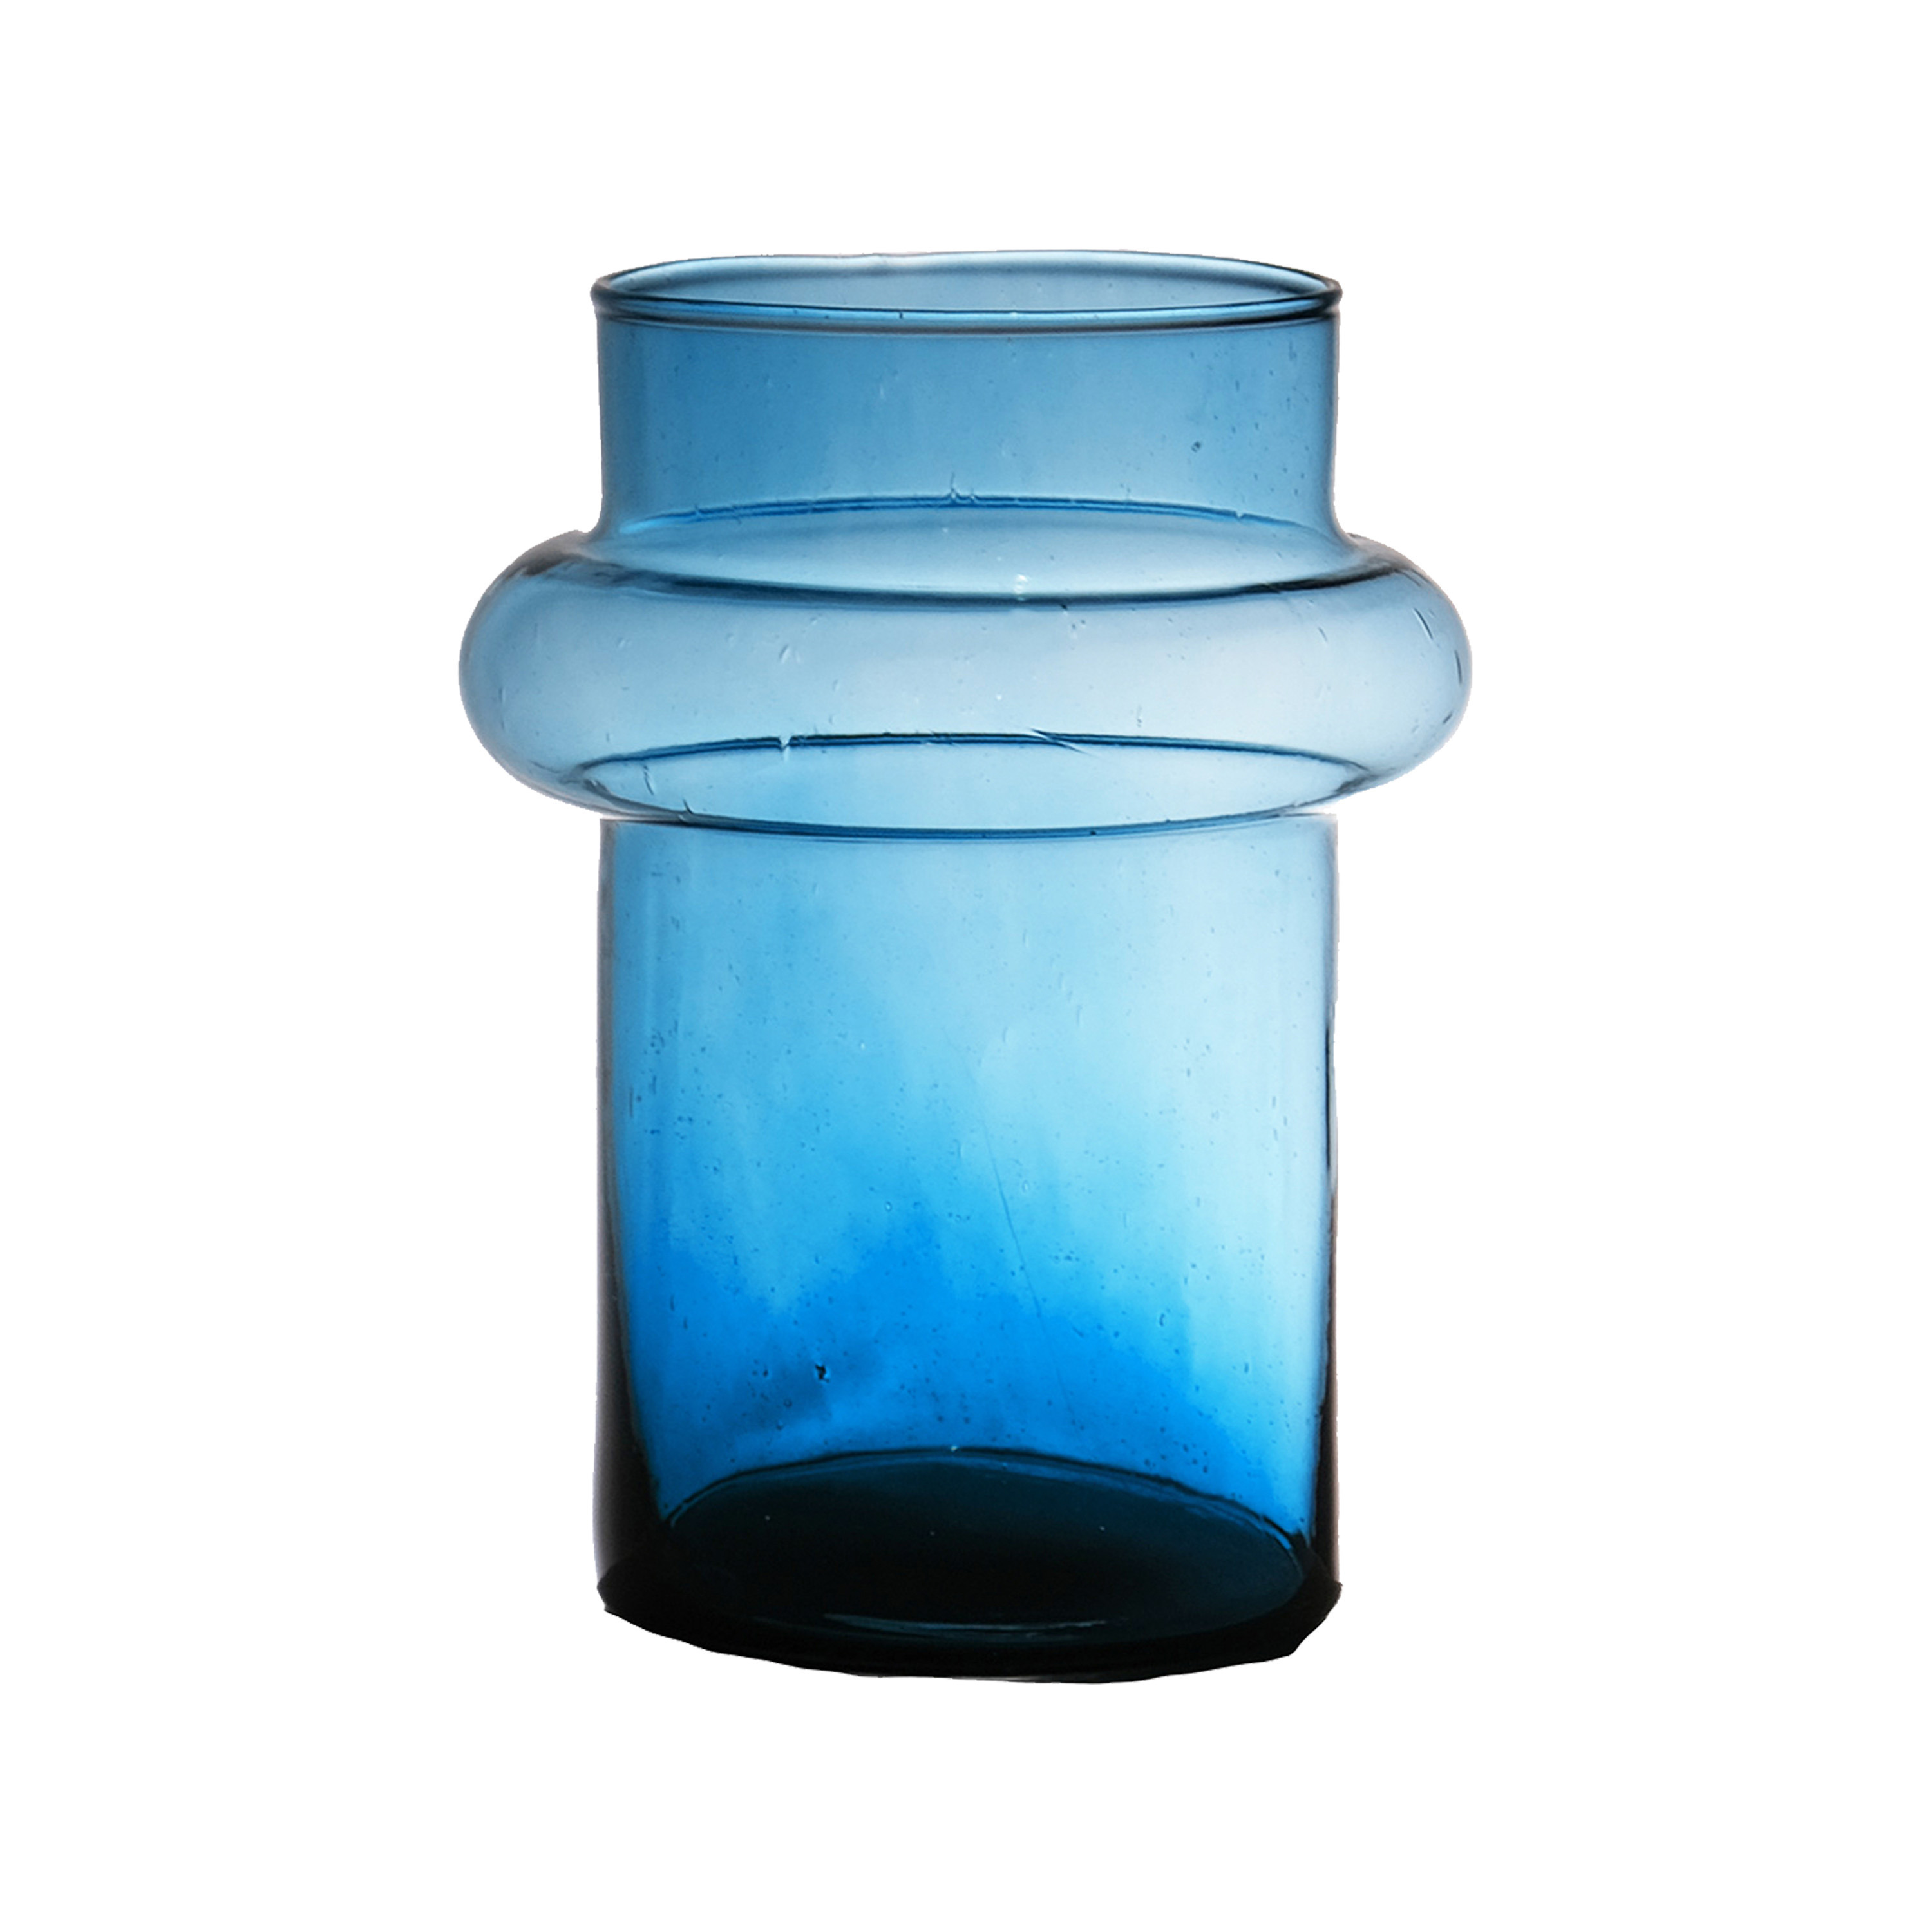 Hakbijl Glass Bloemenvaas Luna - transparant blauw - eco glas - D15 x H20 cm - cilinder vaas -